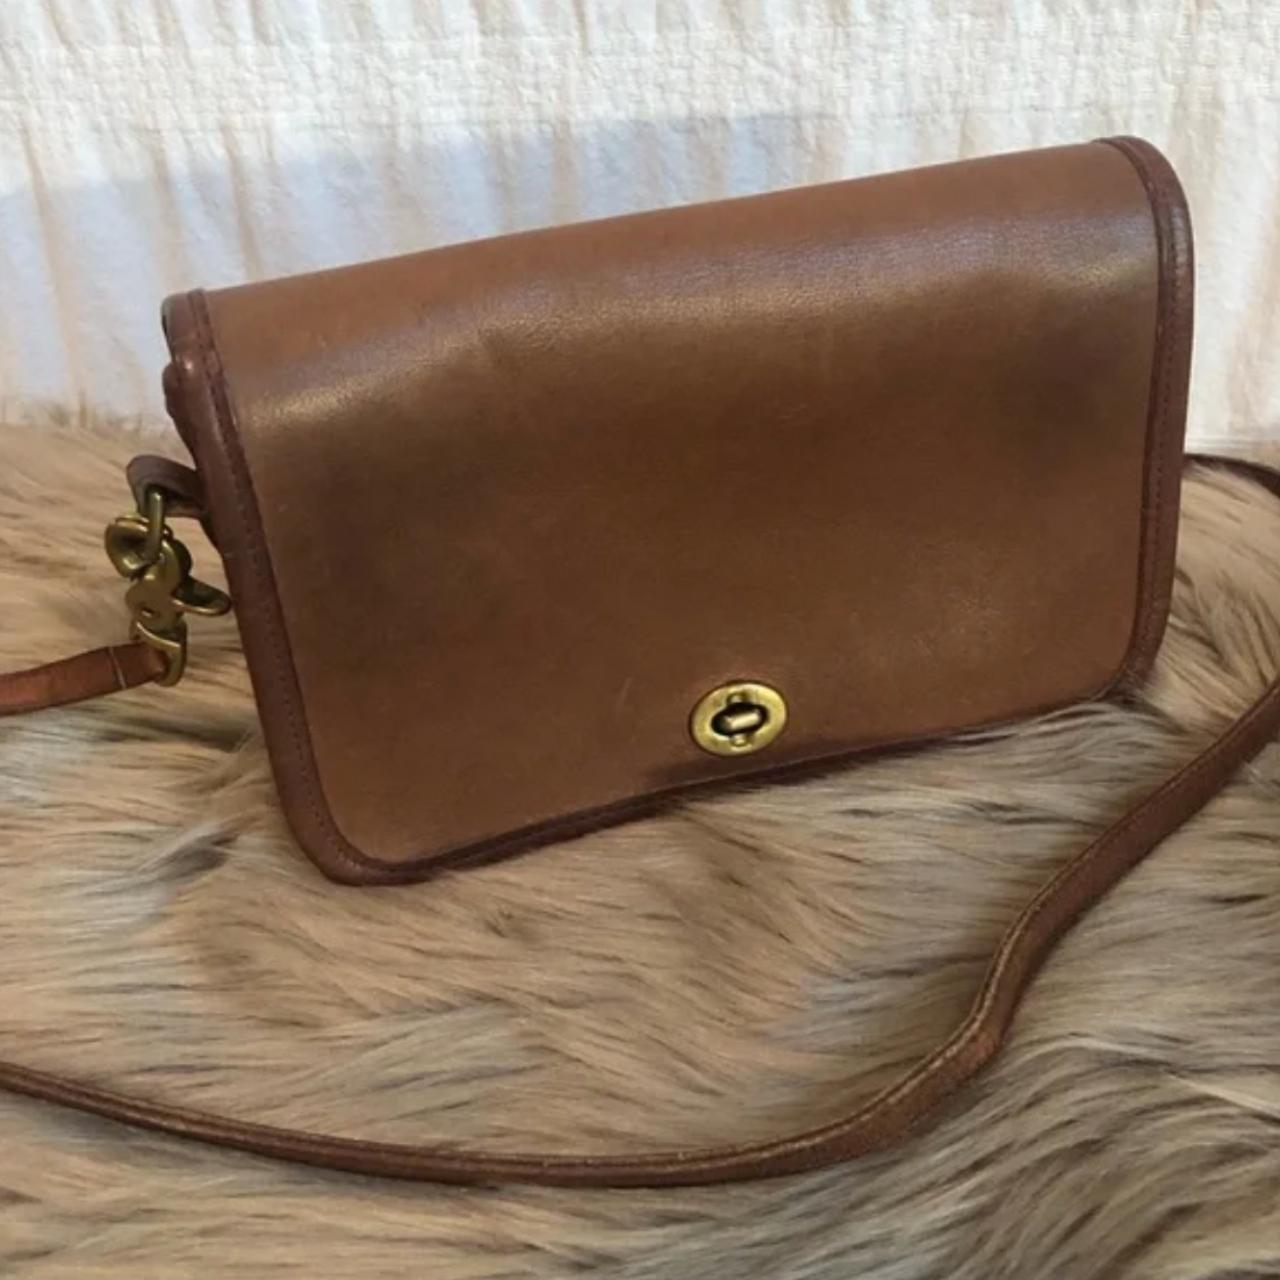 Vintage Coach Bag Penny Pocket in British Tan Leather Crossbody Purse